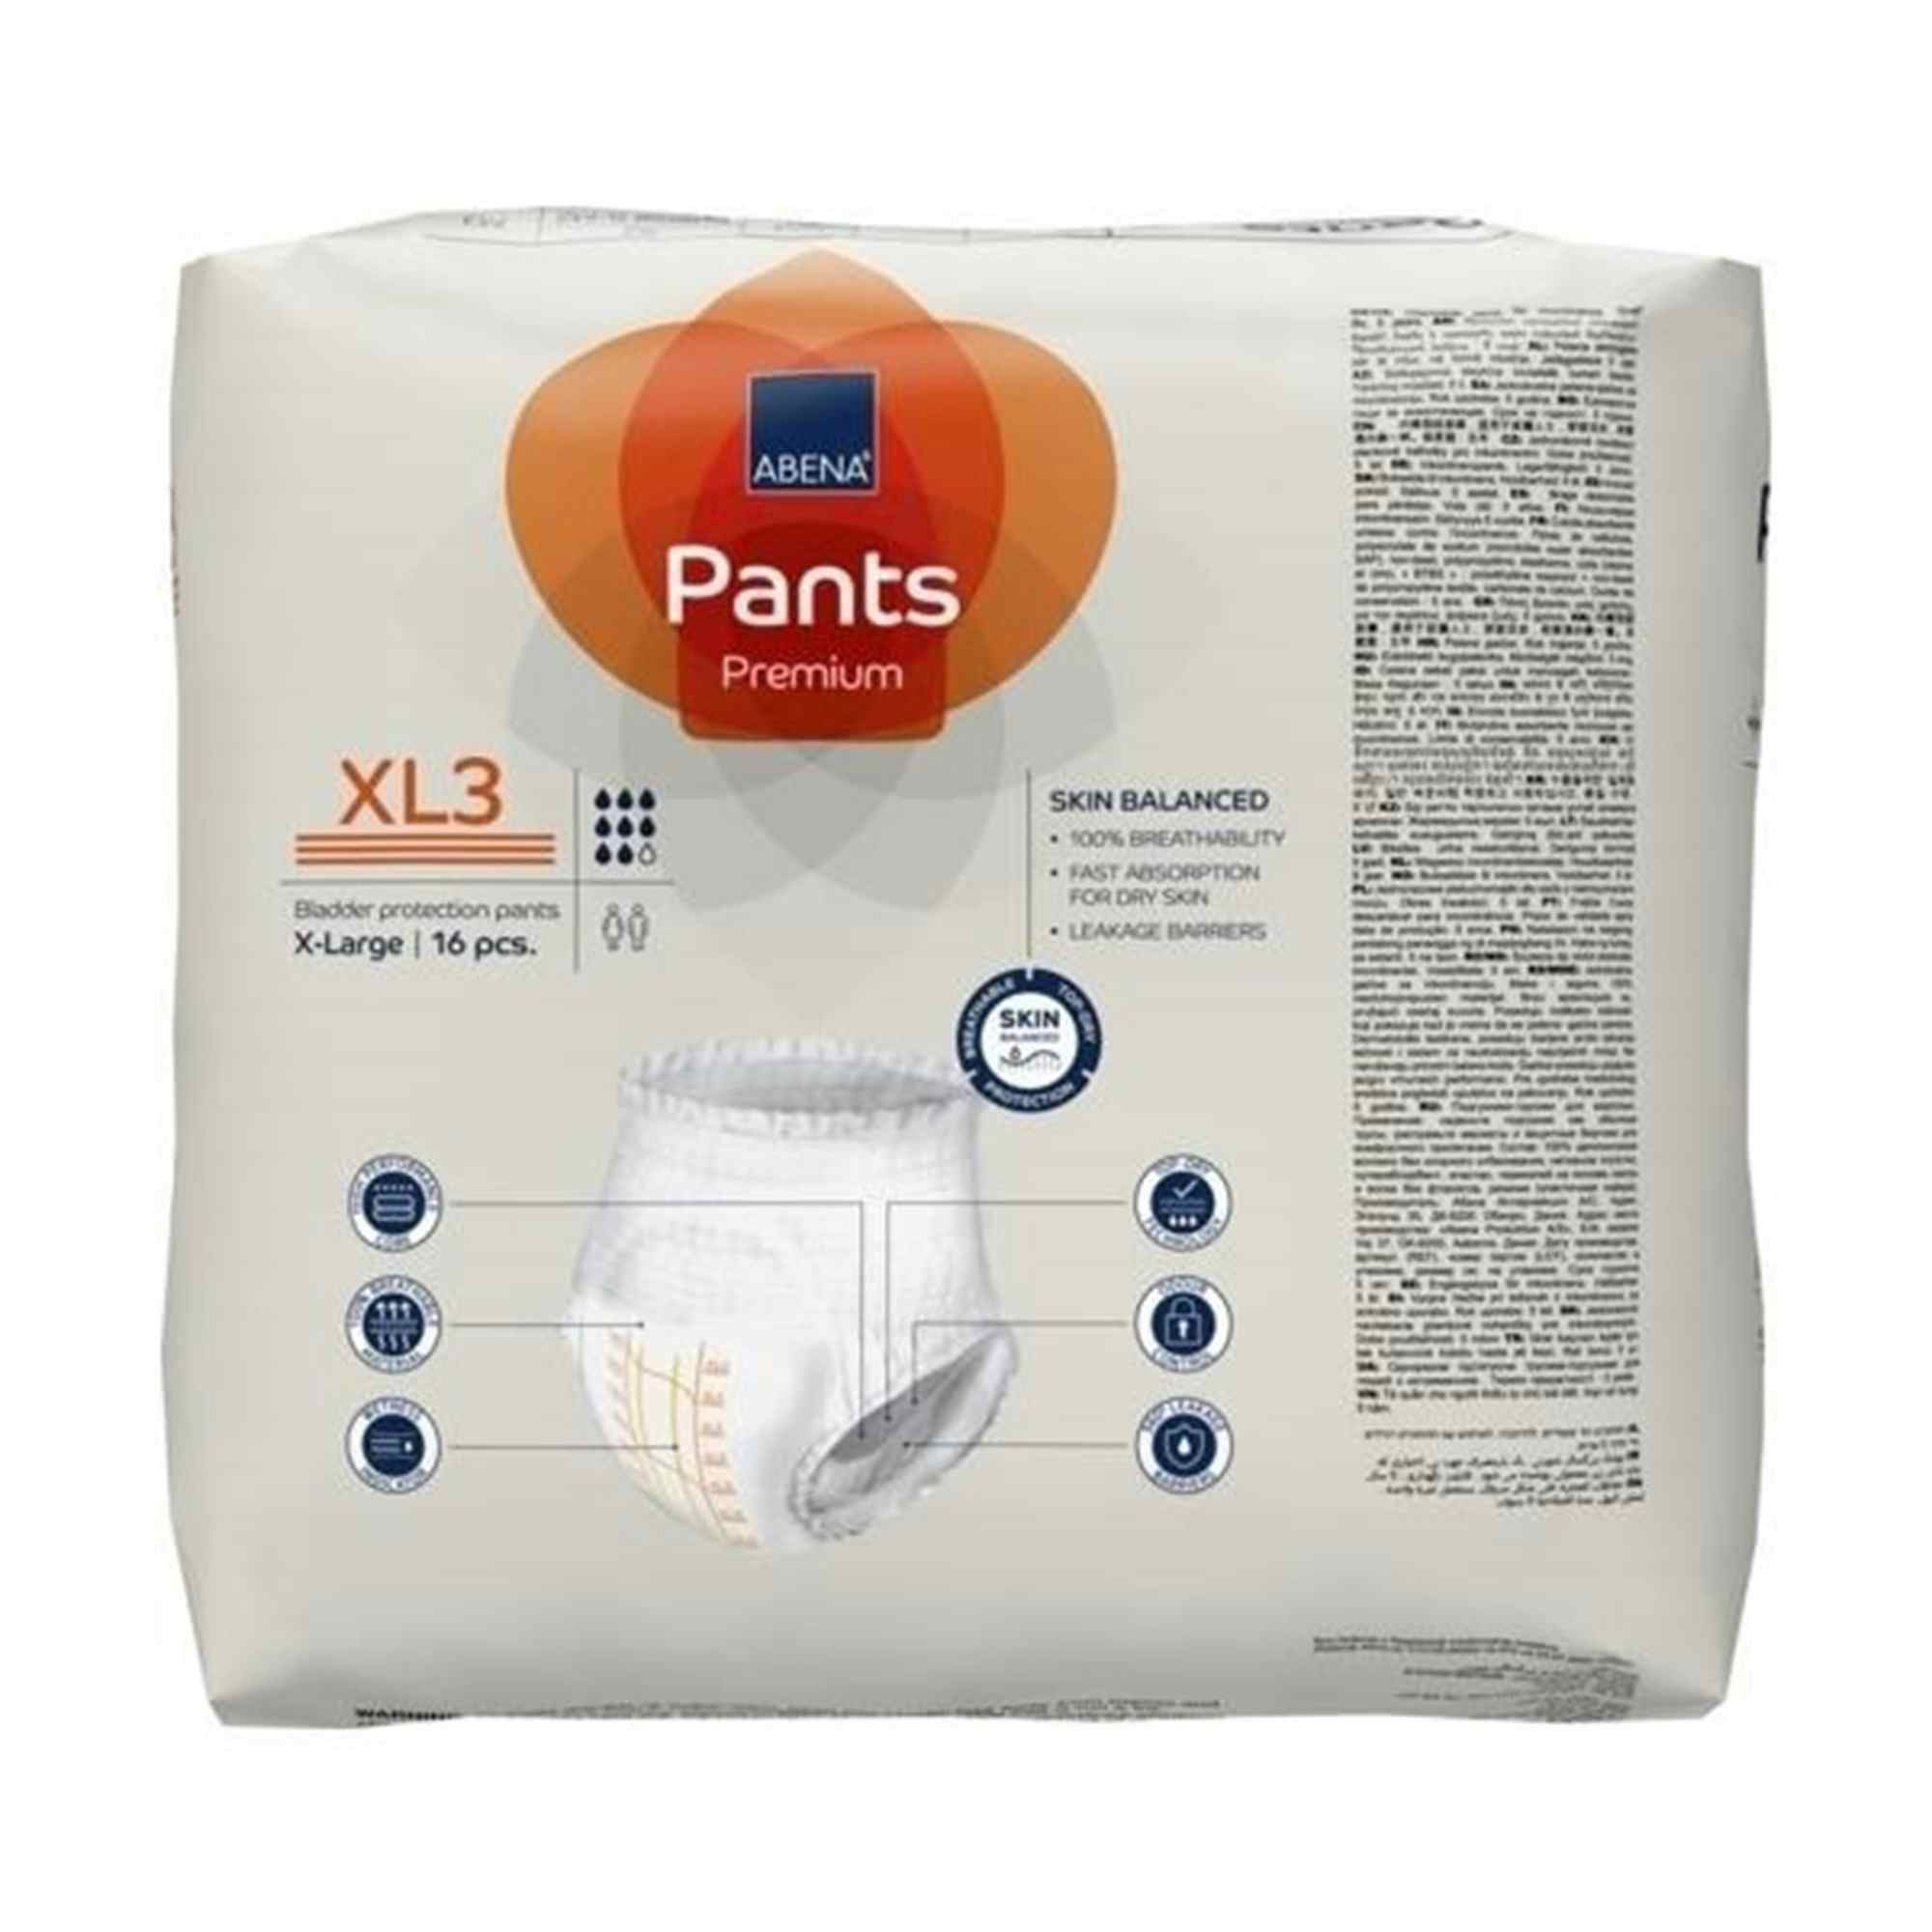 Abena Pants Pull-Up Underwear, Level 3s